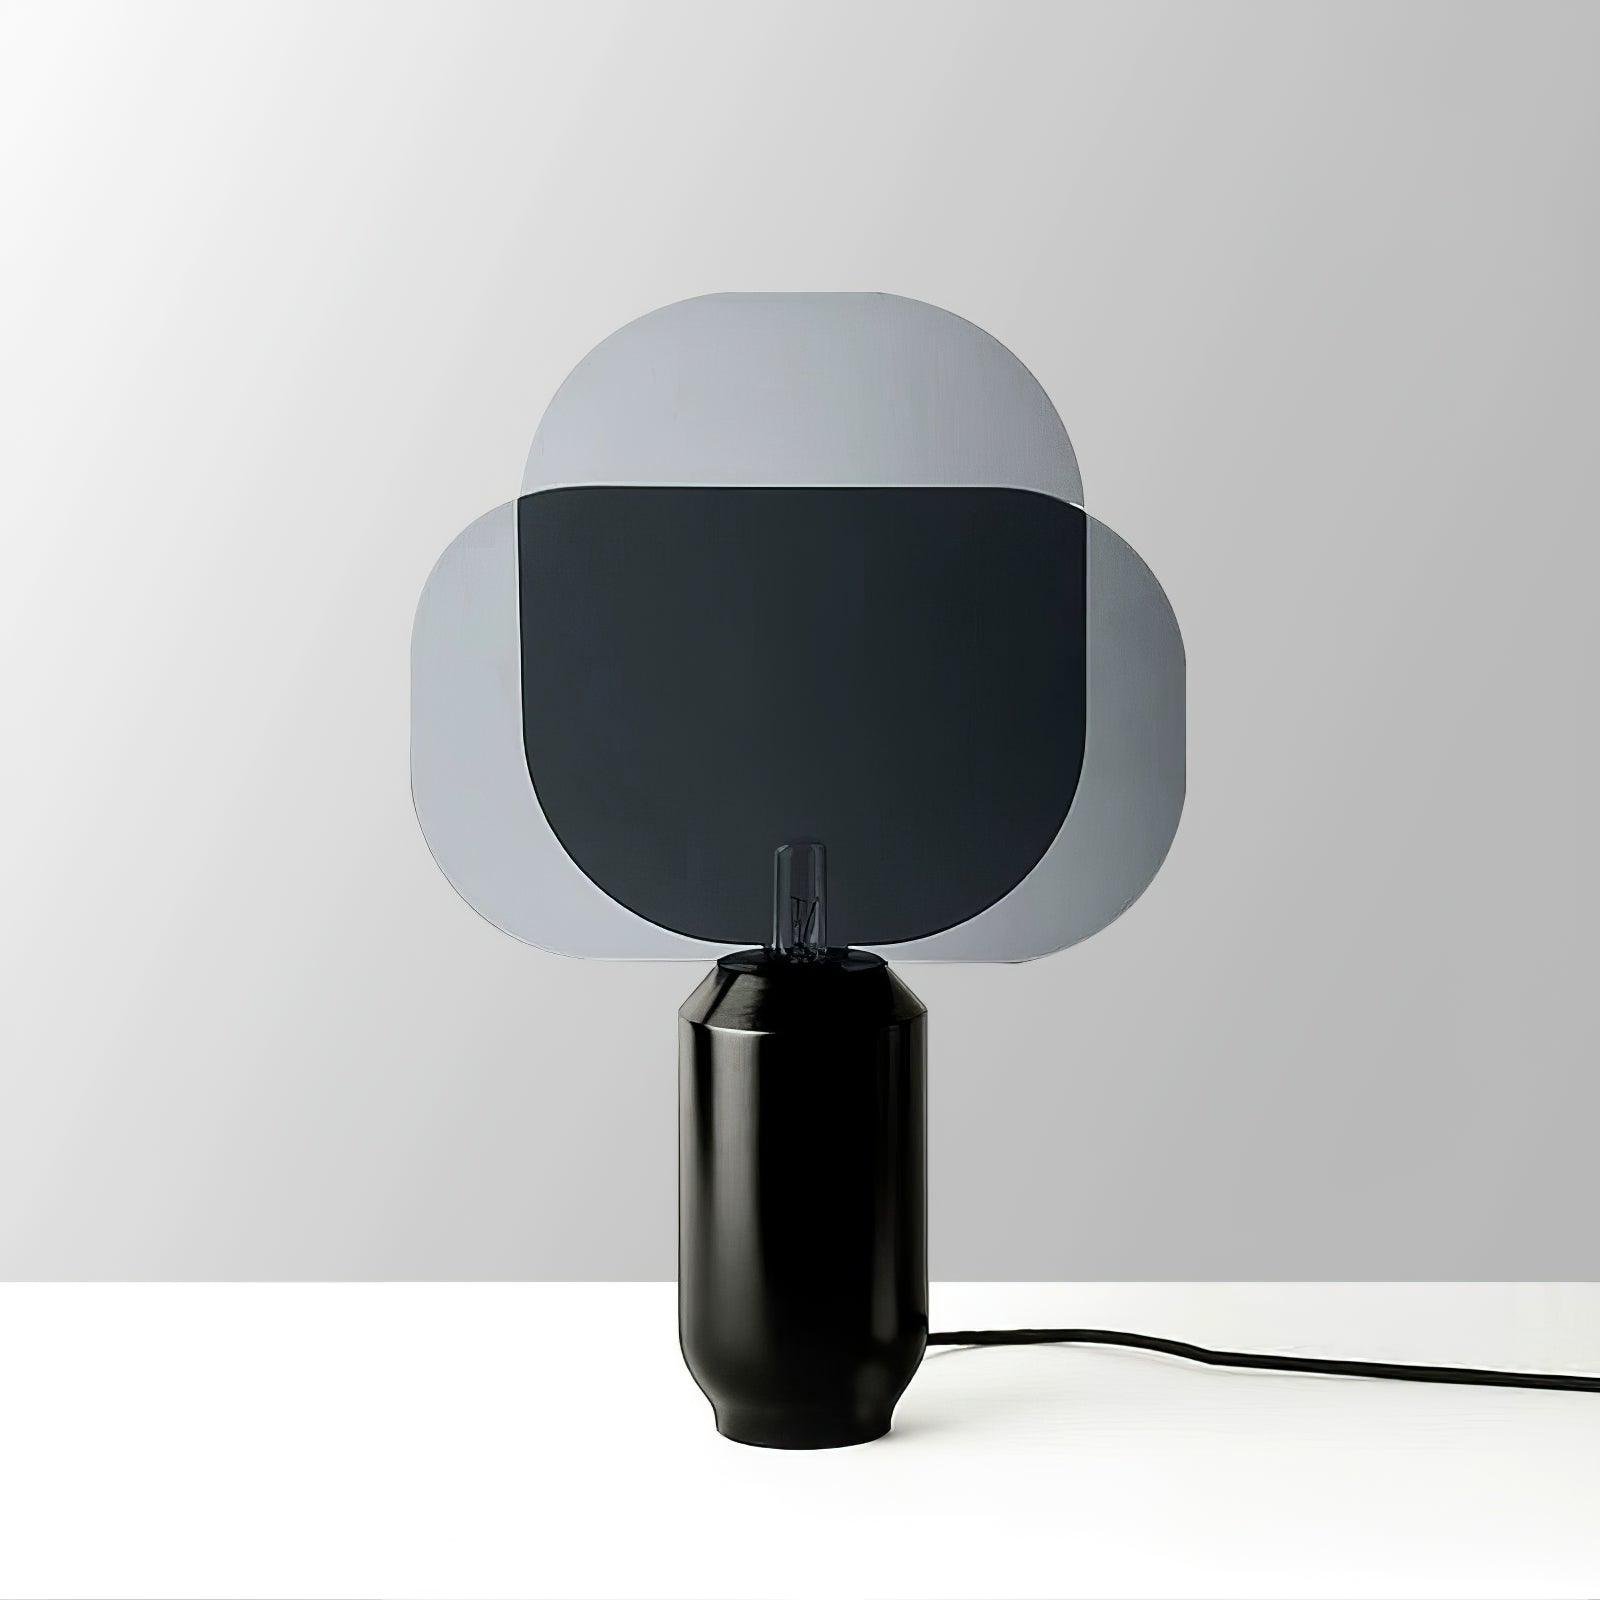 Bery Table Lamp - 13.7" Diameter x 20.4" Height (35cm x 52cm) - Black and Smoke Gray - Includes UK Plug